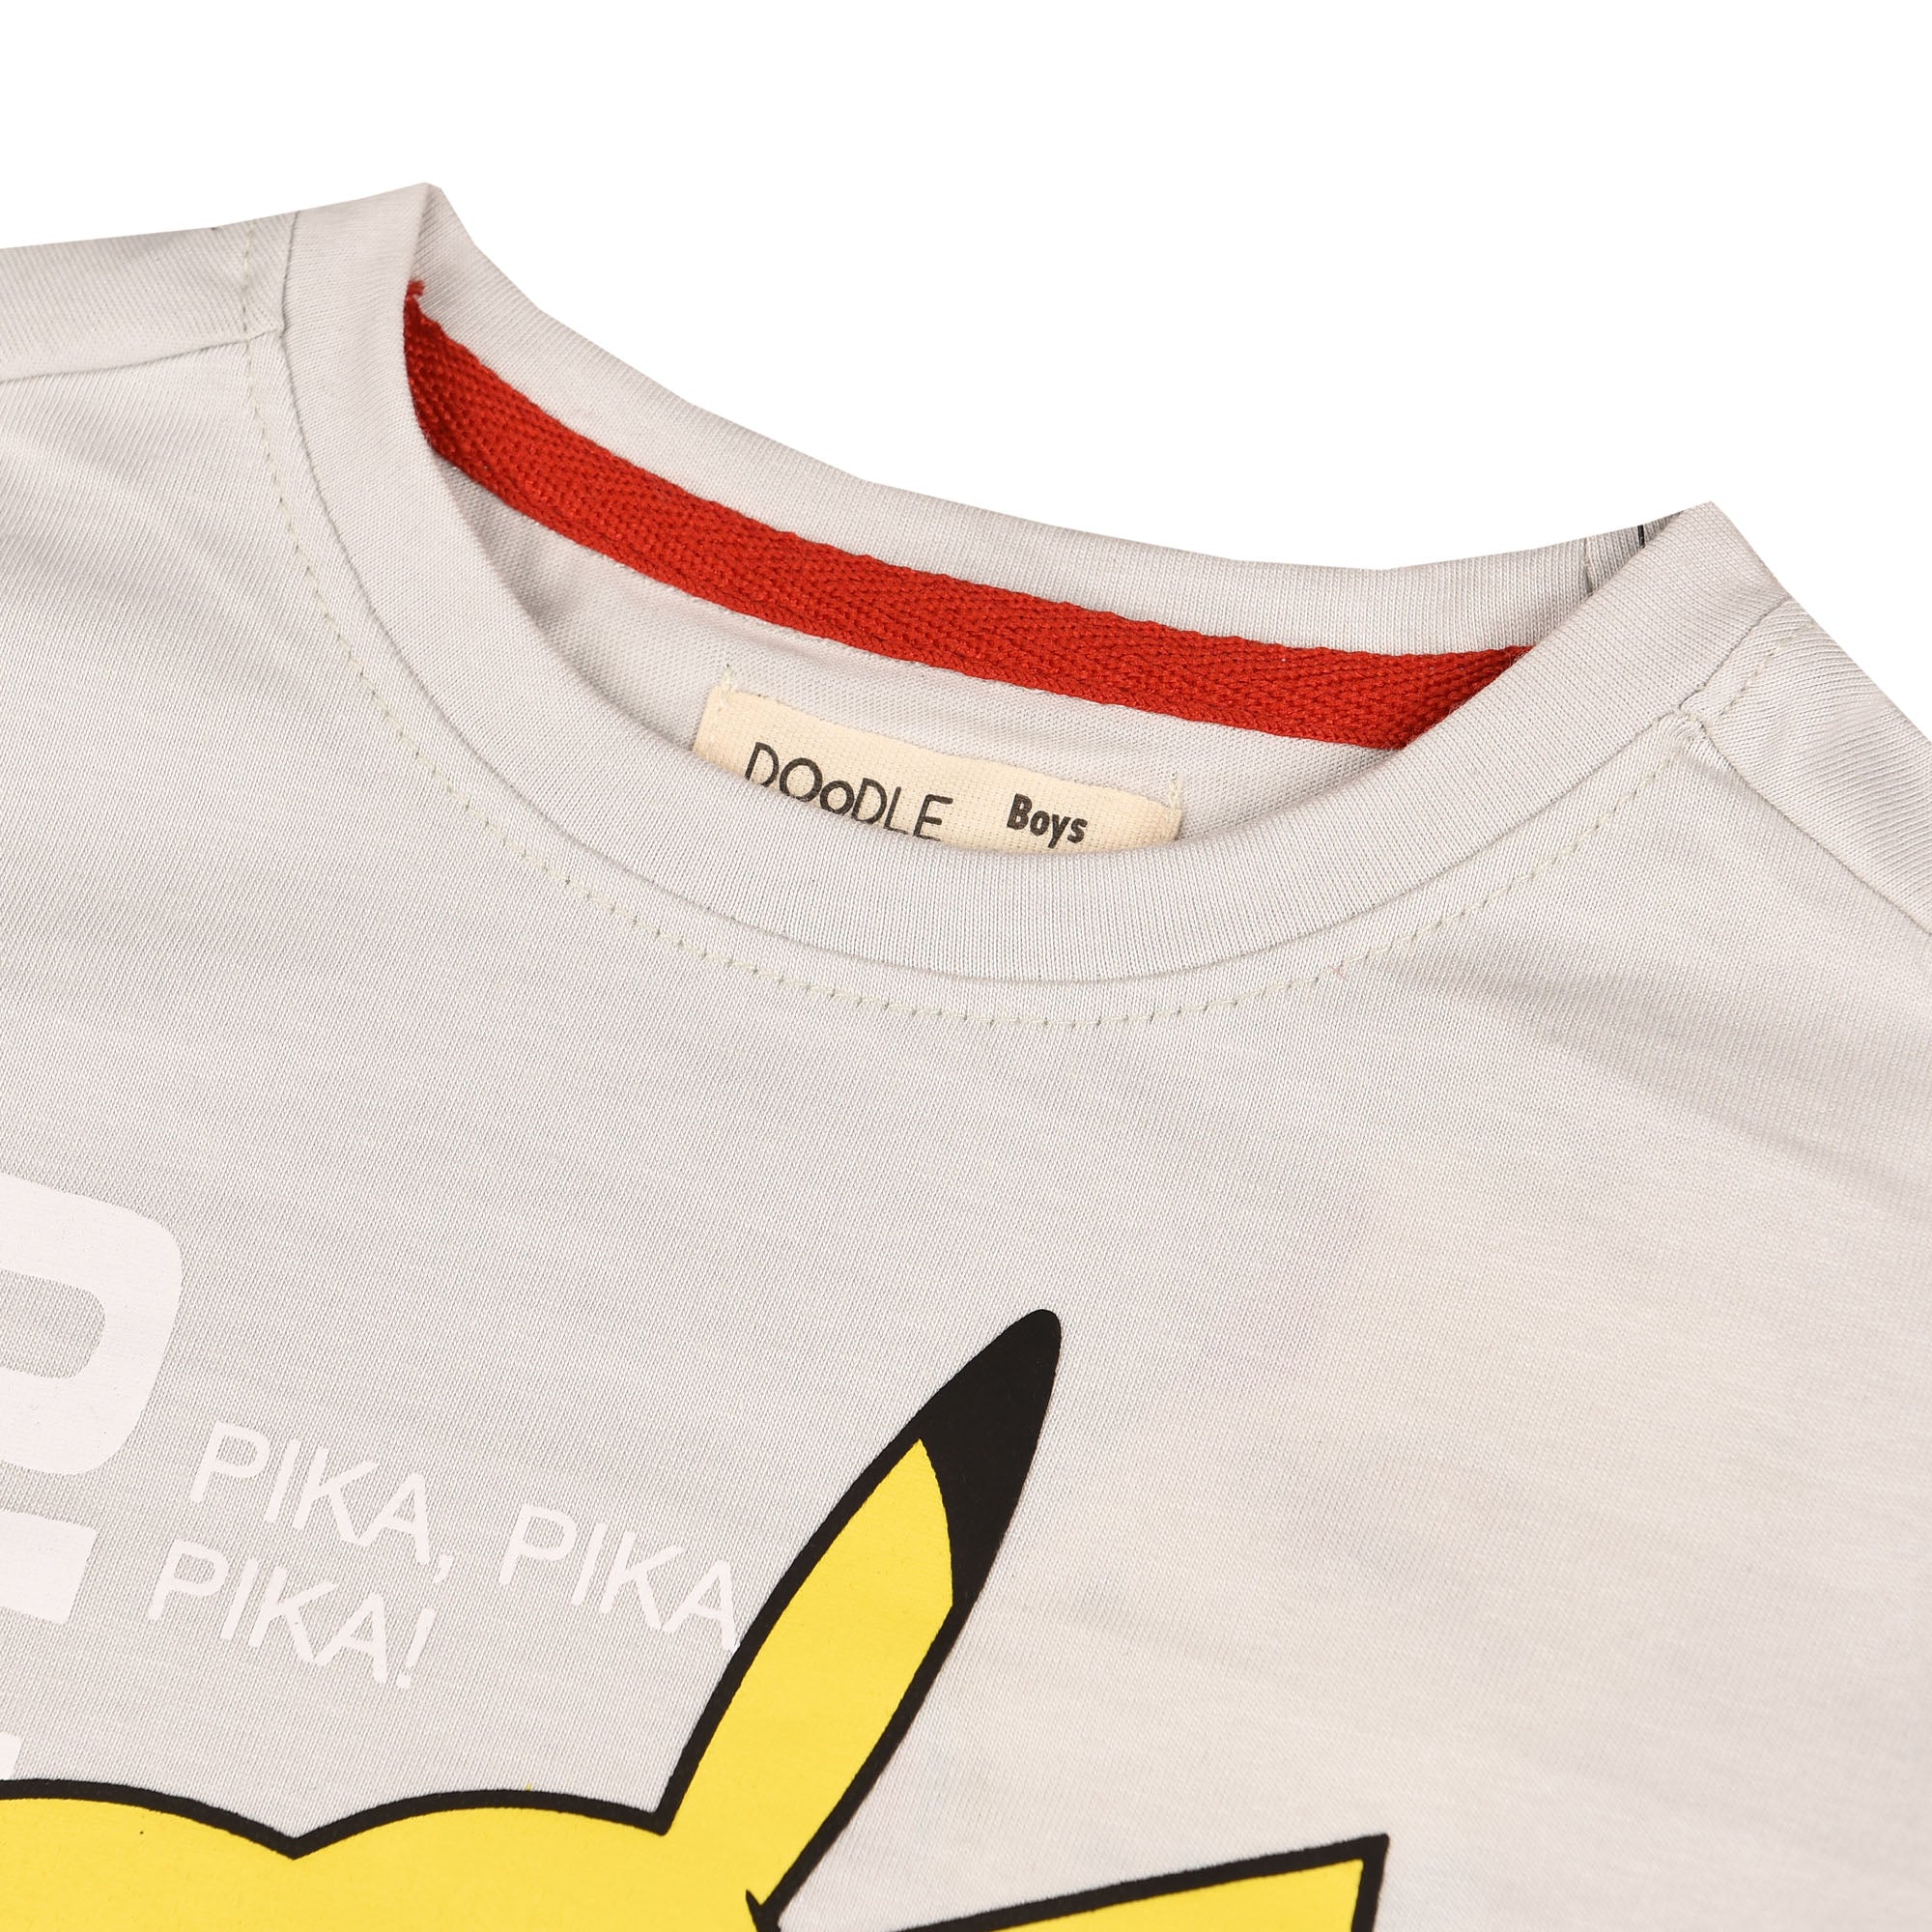 Pikachu Graphic Tee